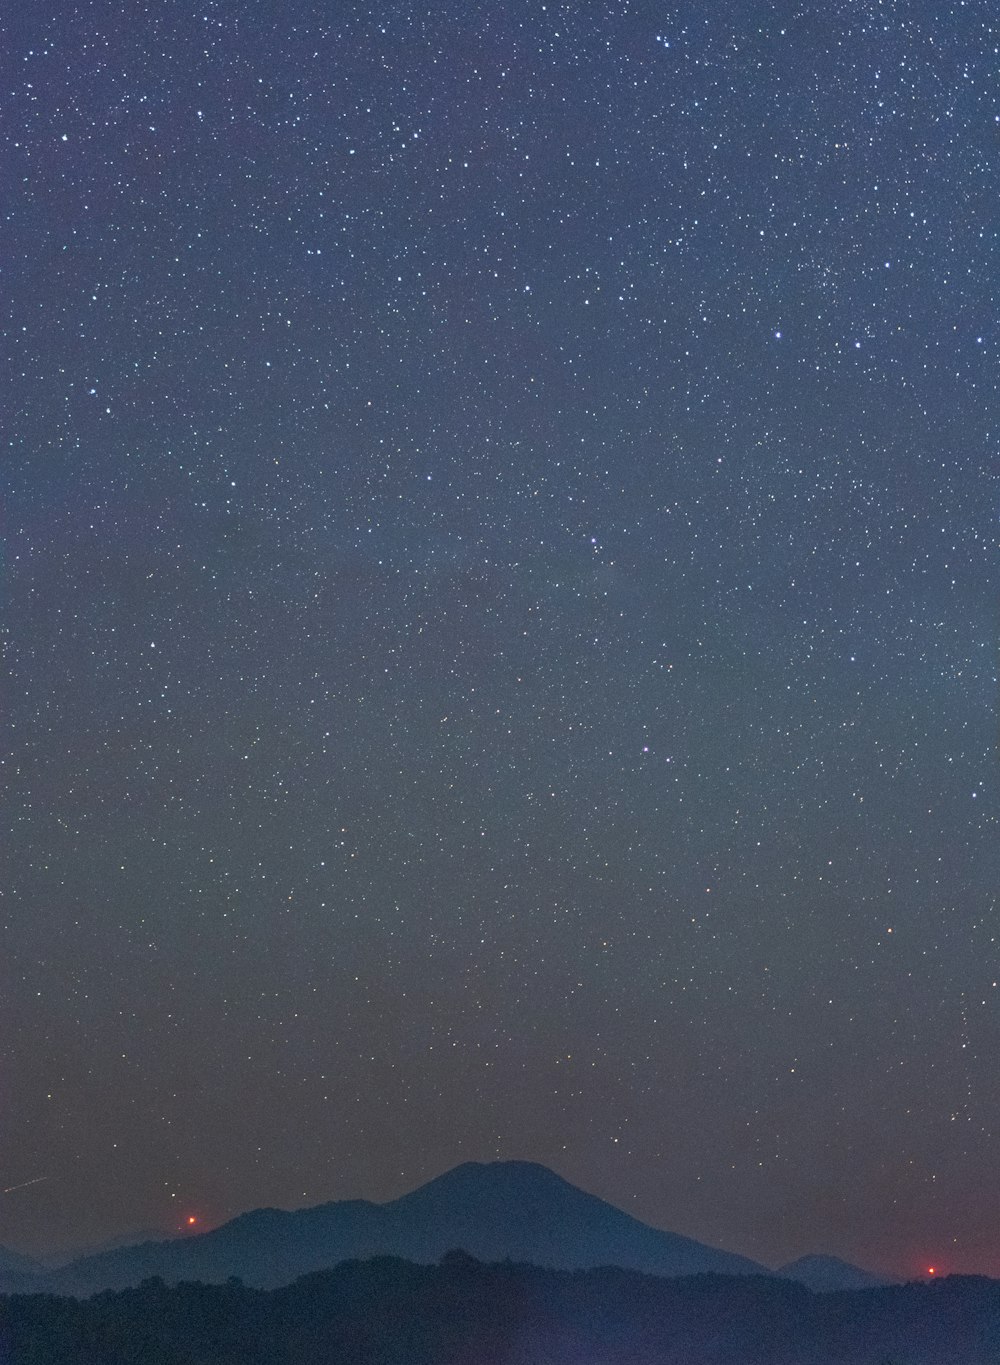 a mountain under a starry sky